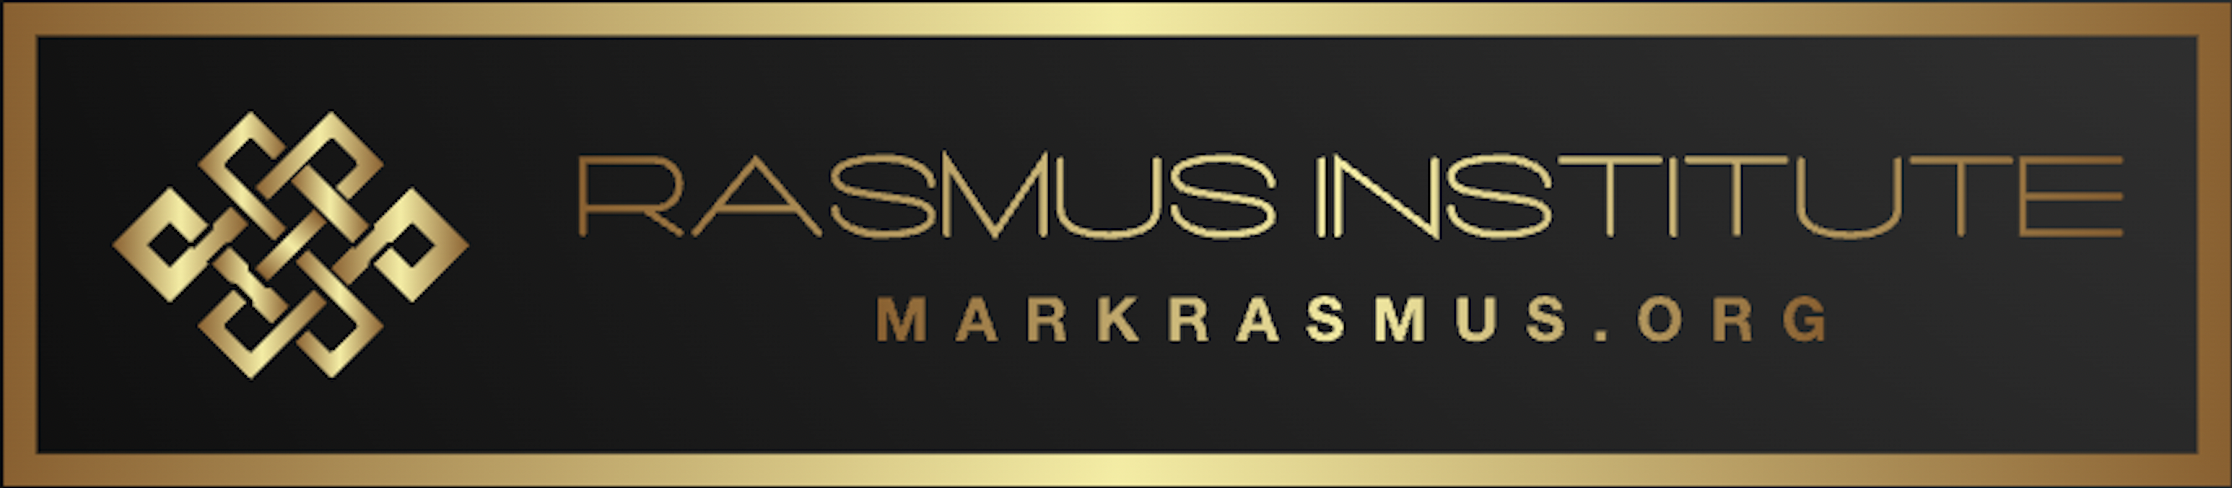 markrasmus.org